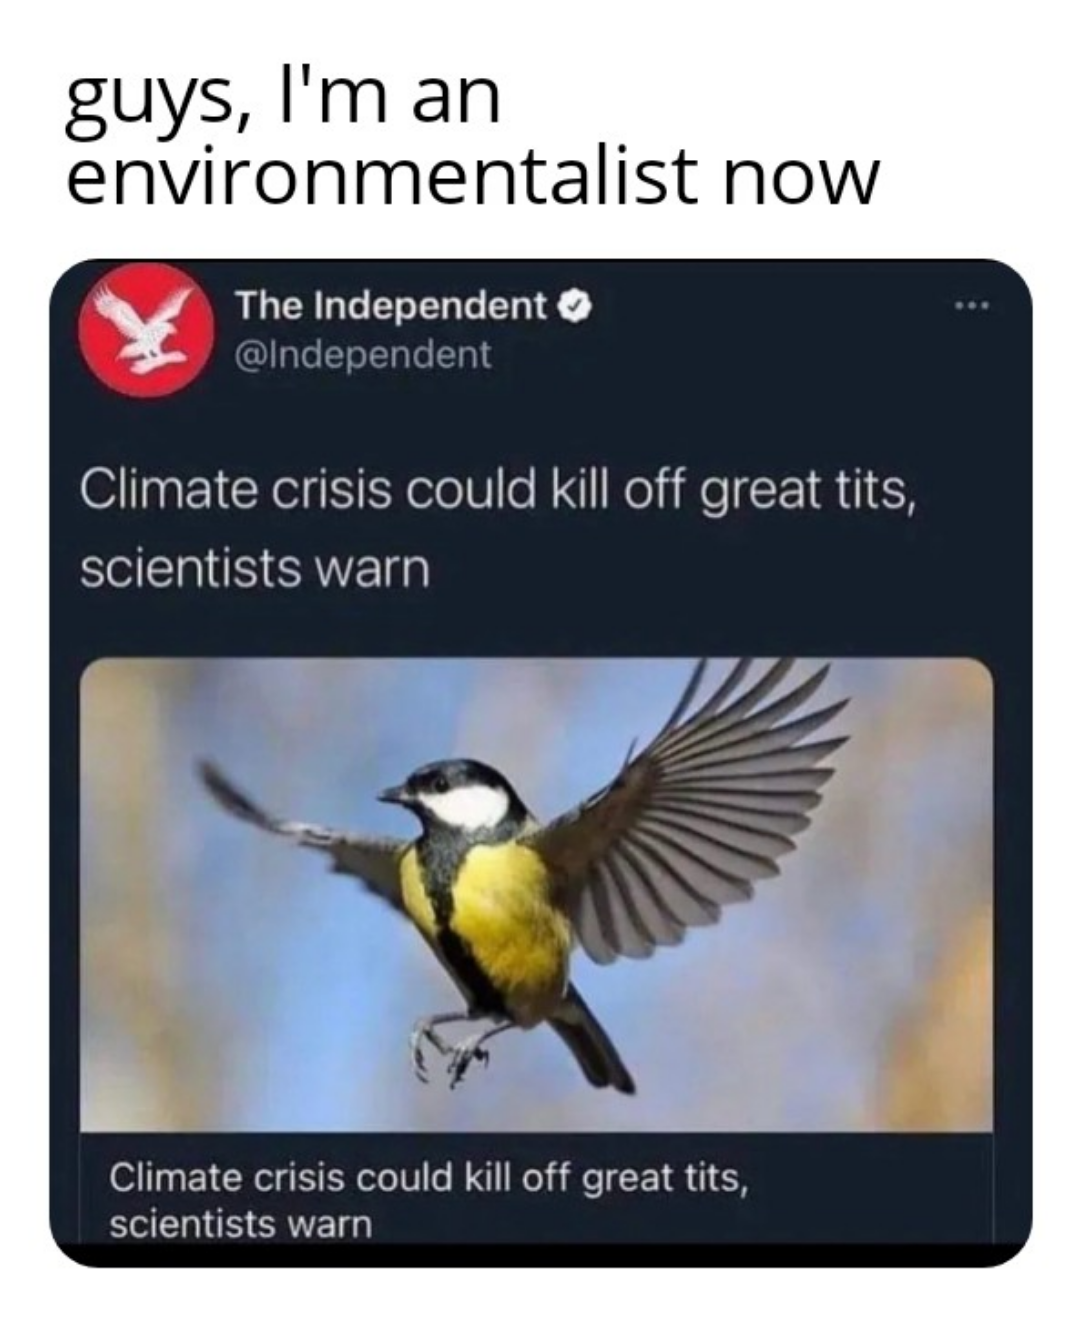 climate change is a big problem